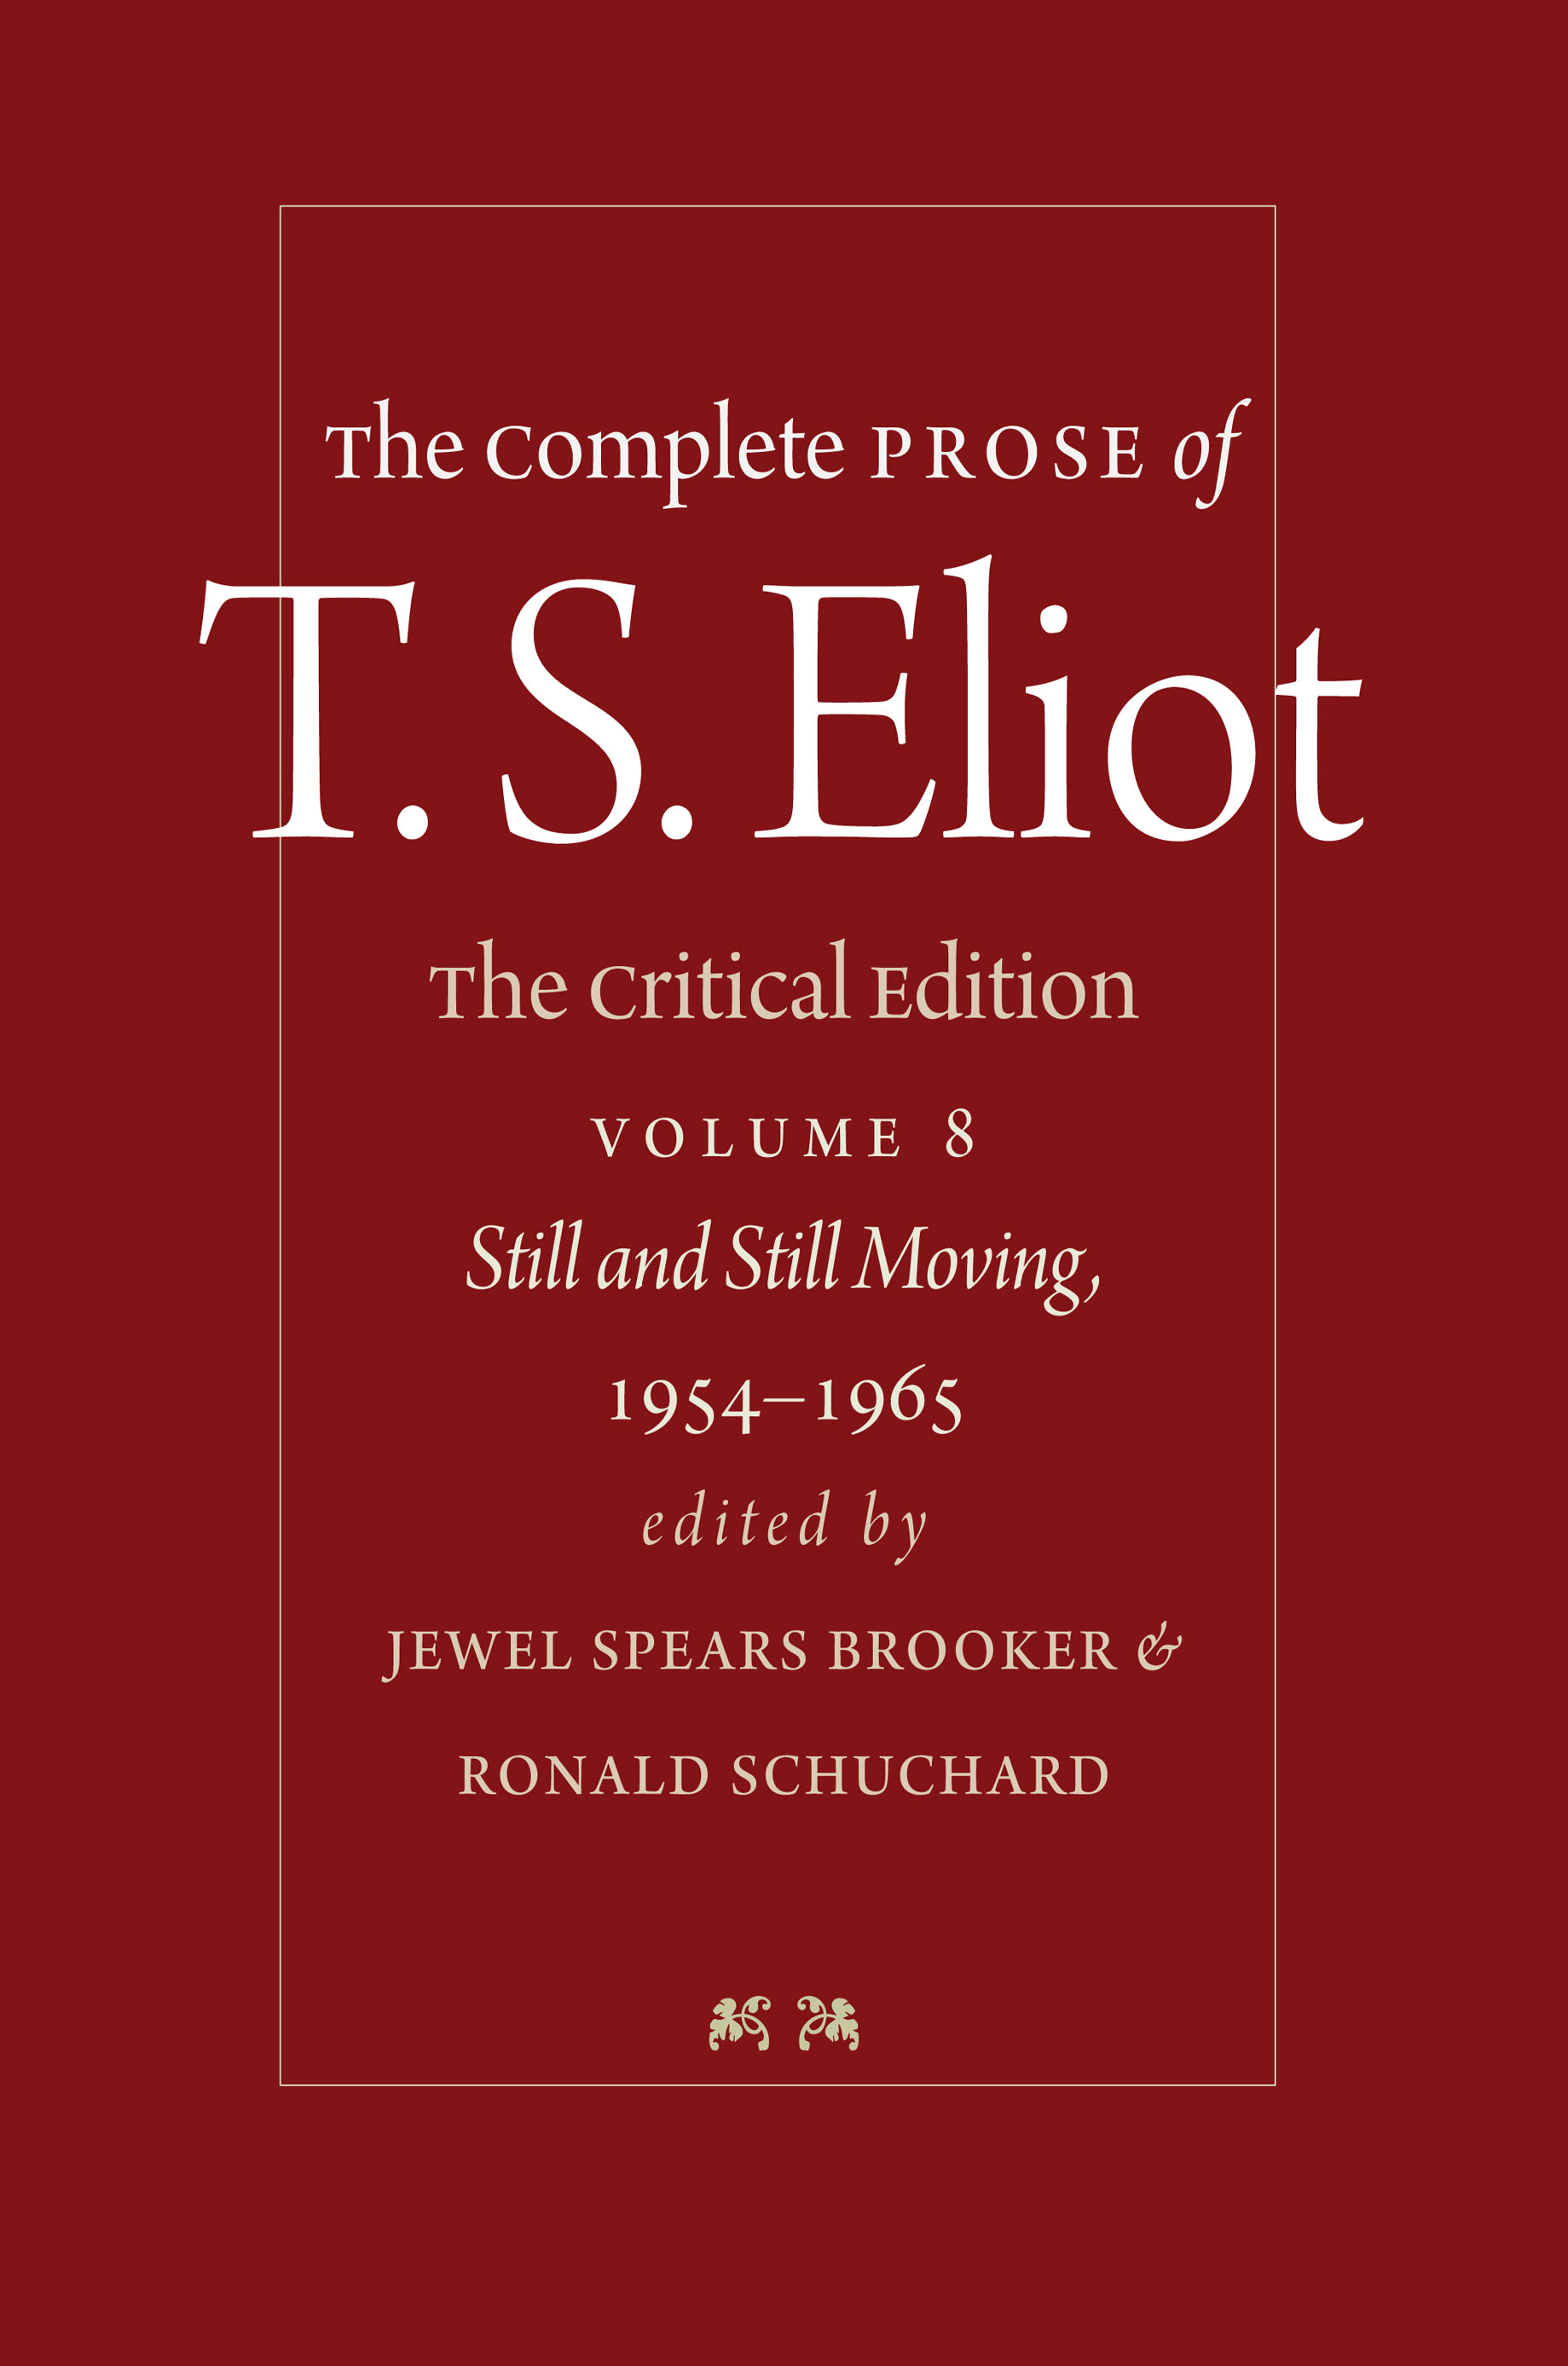 Complete Prose of T.S. Eliot volume 8